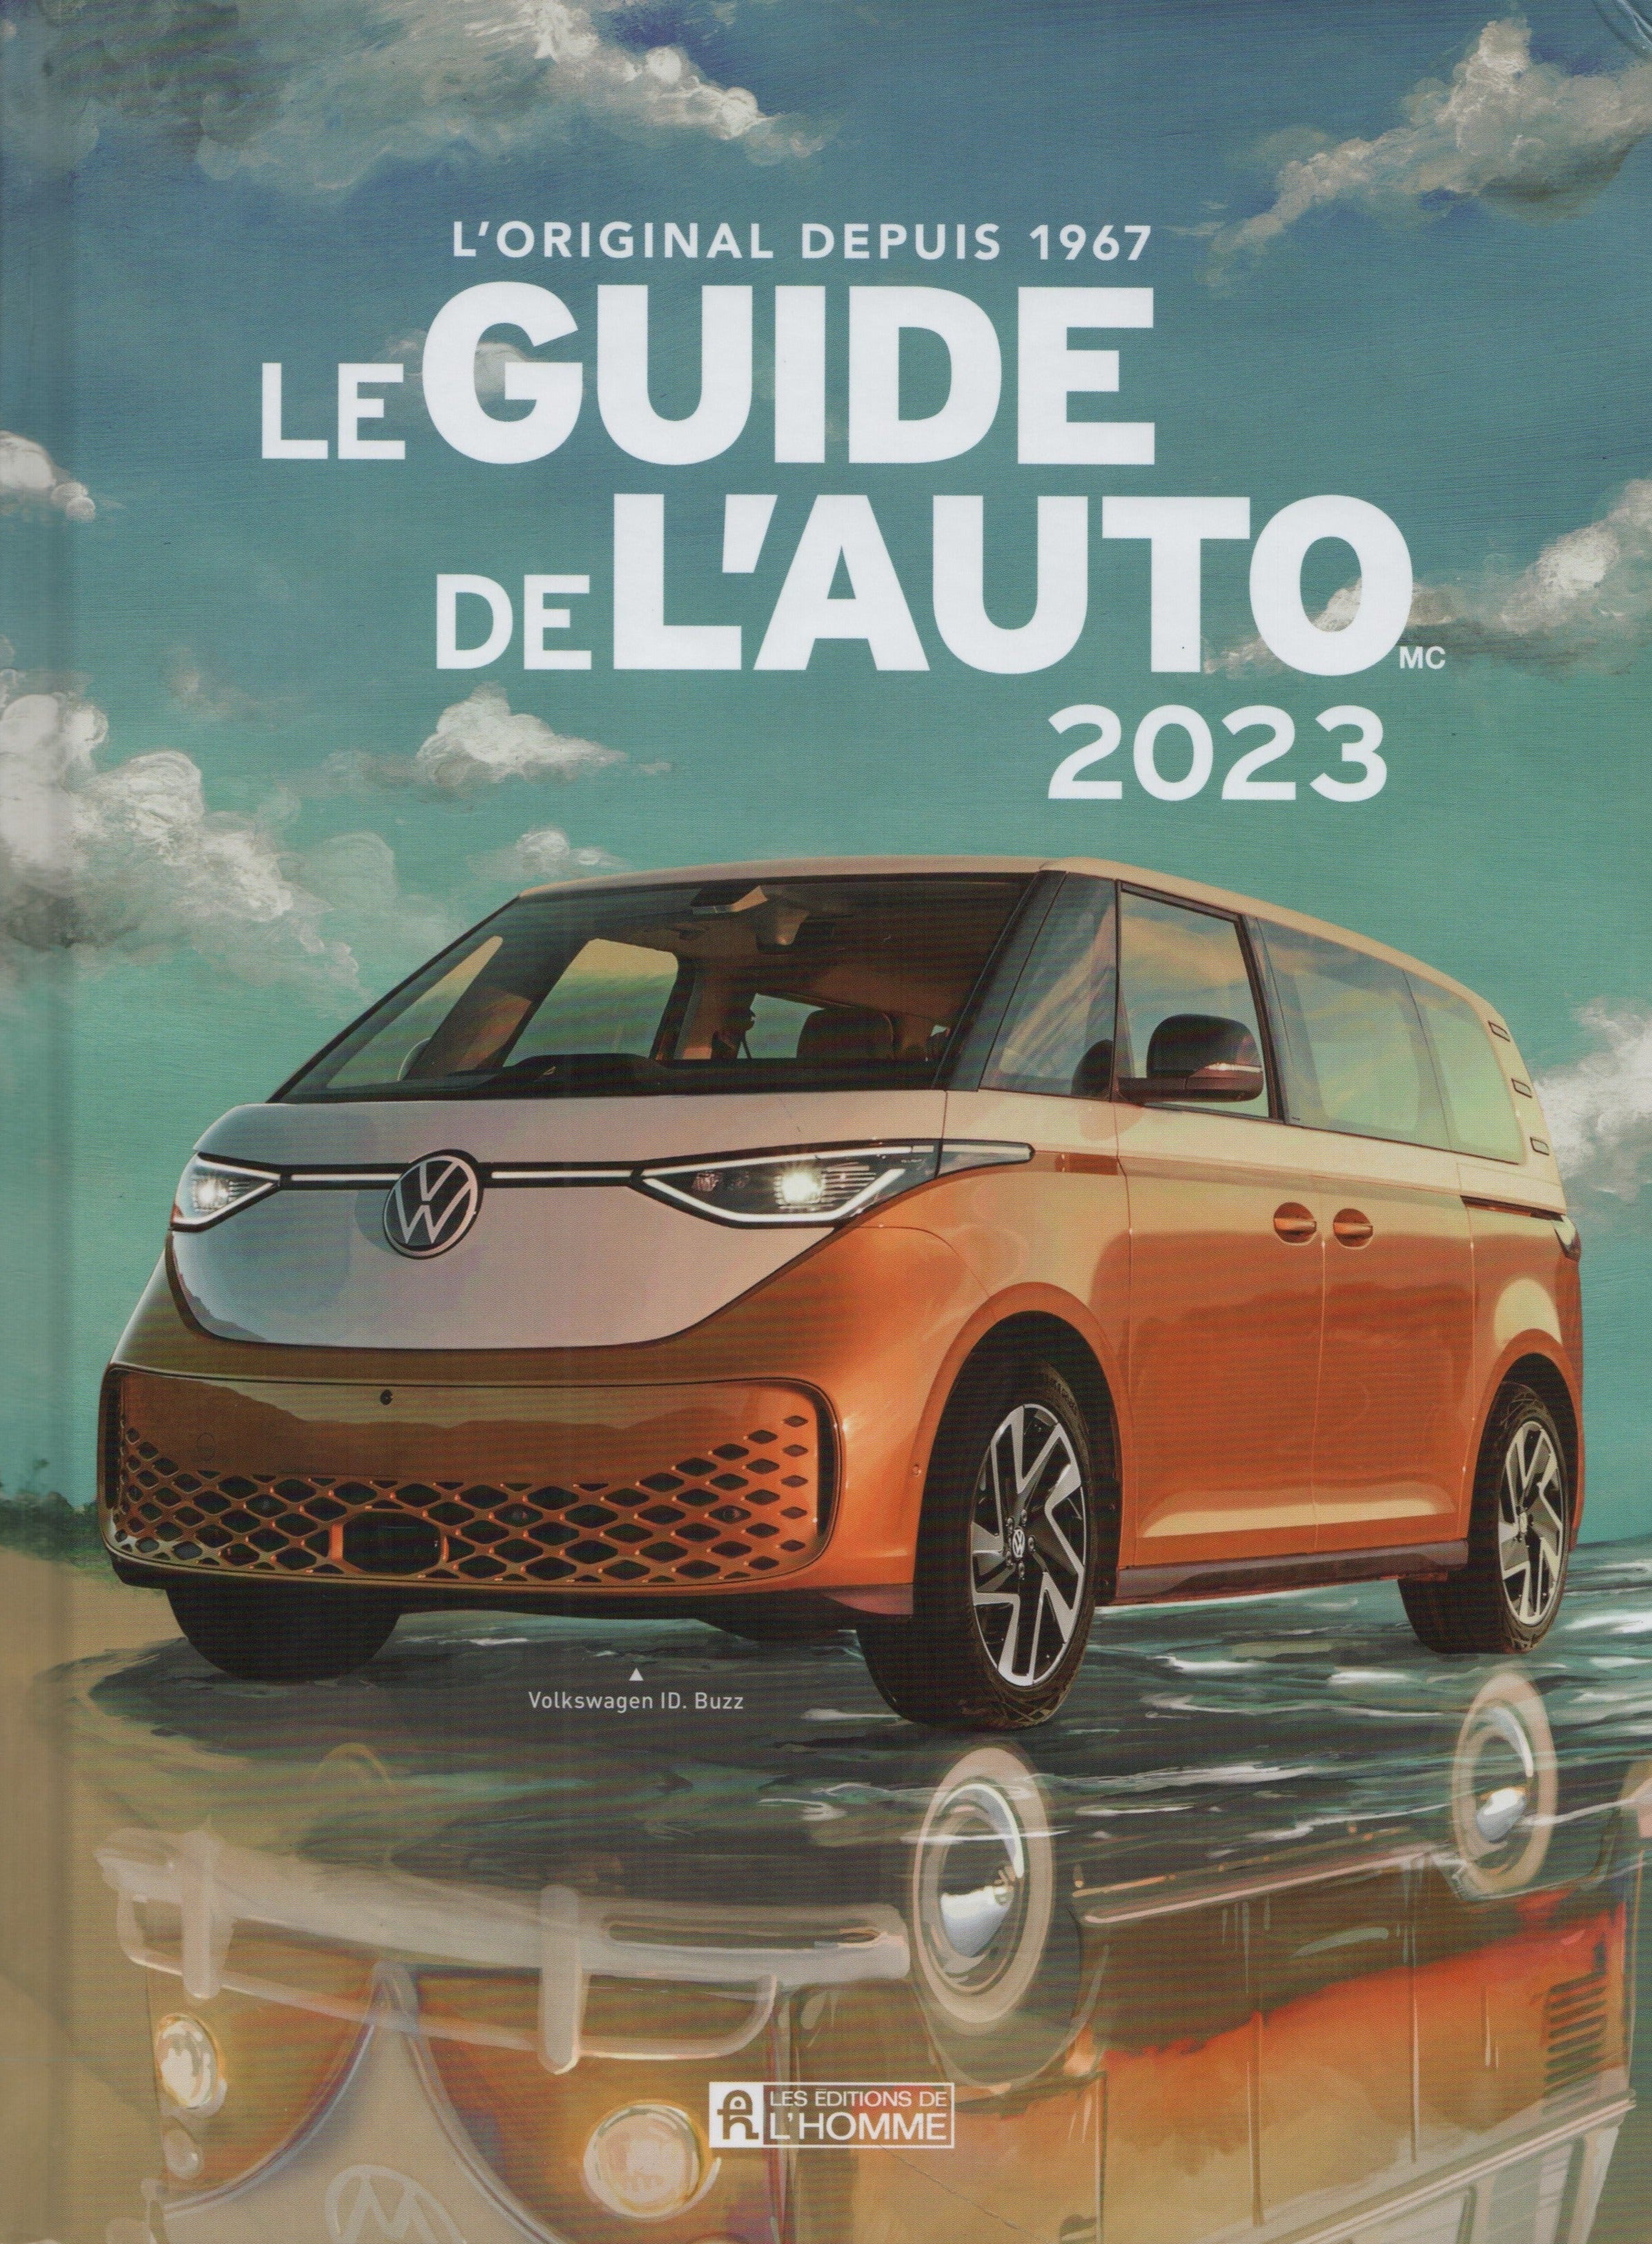 GUIDE DE L'AUTO (LE). Le Guide de l'auto 2023